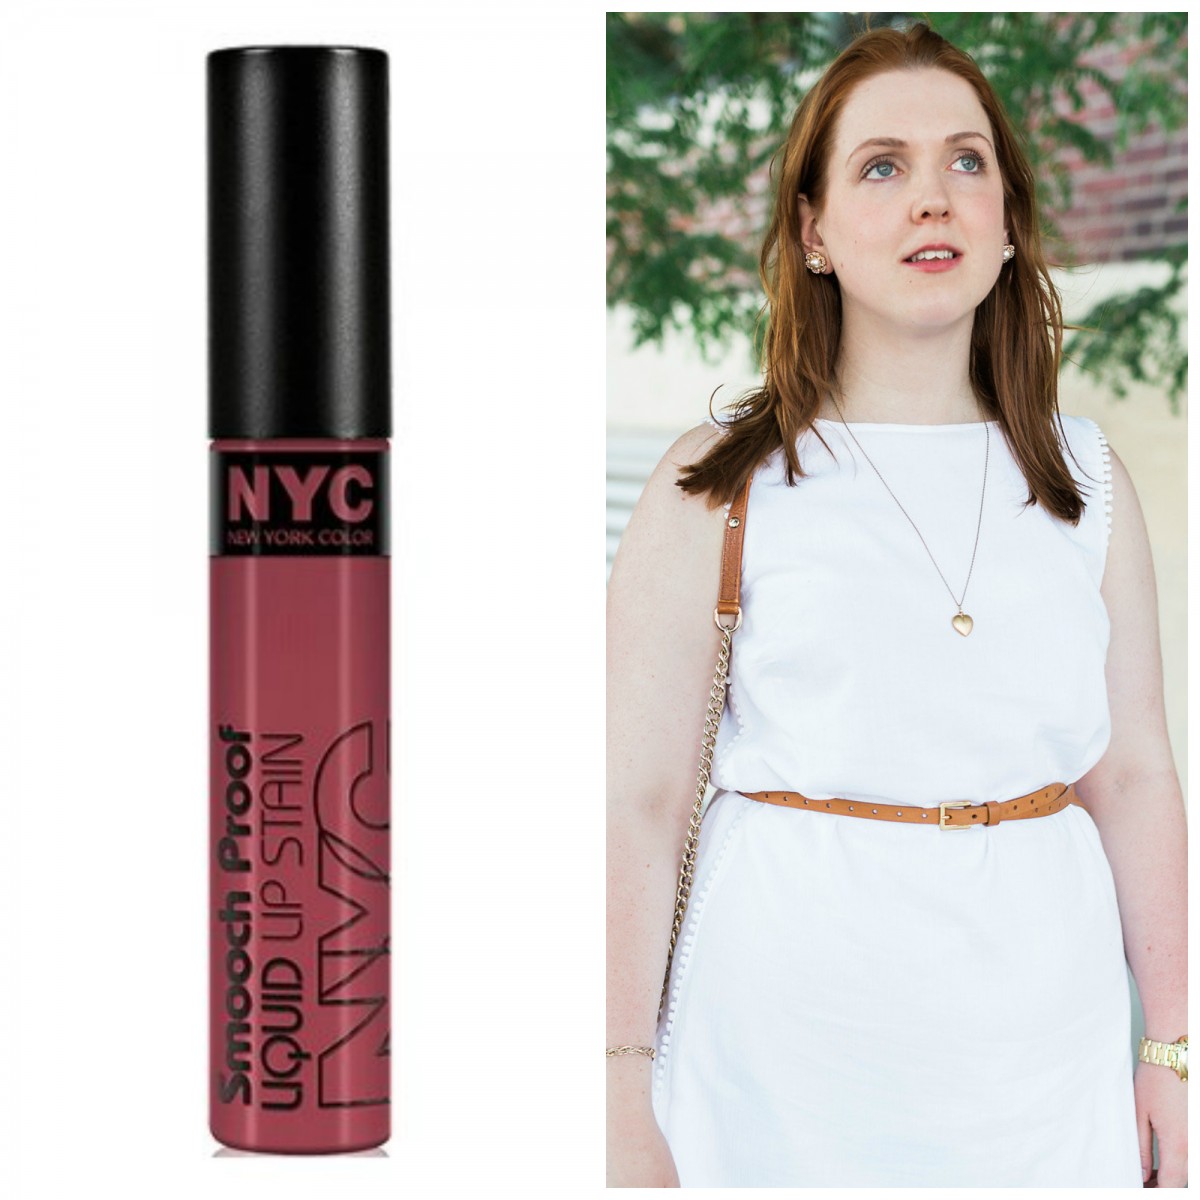 NYC Smooch Proof Liquid Lip Stain On Eyeryone's Lips